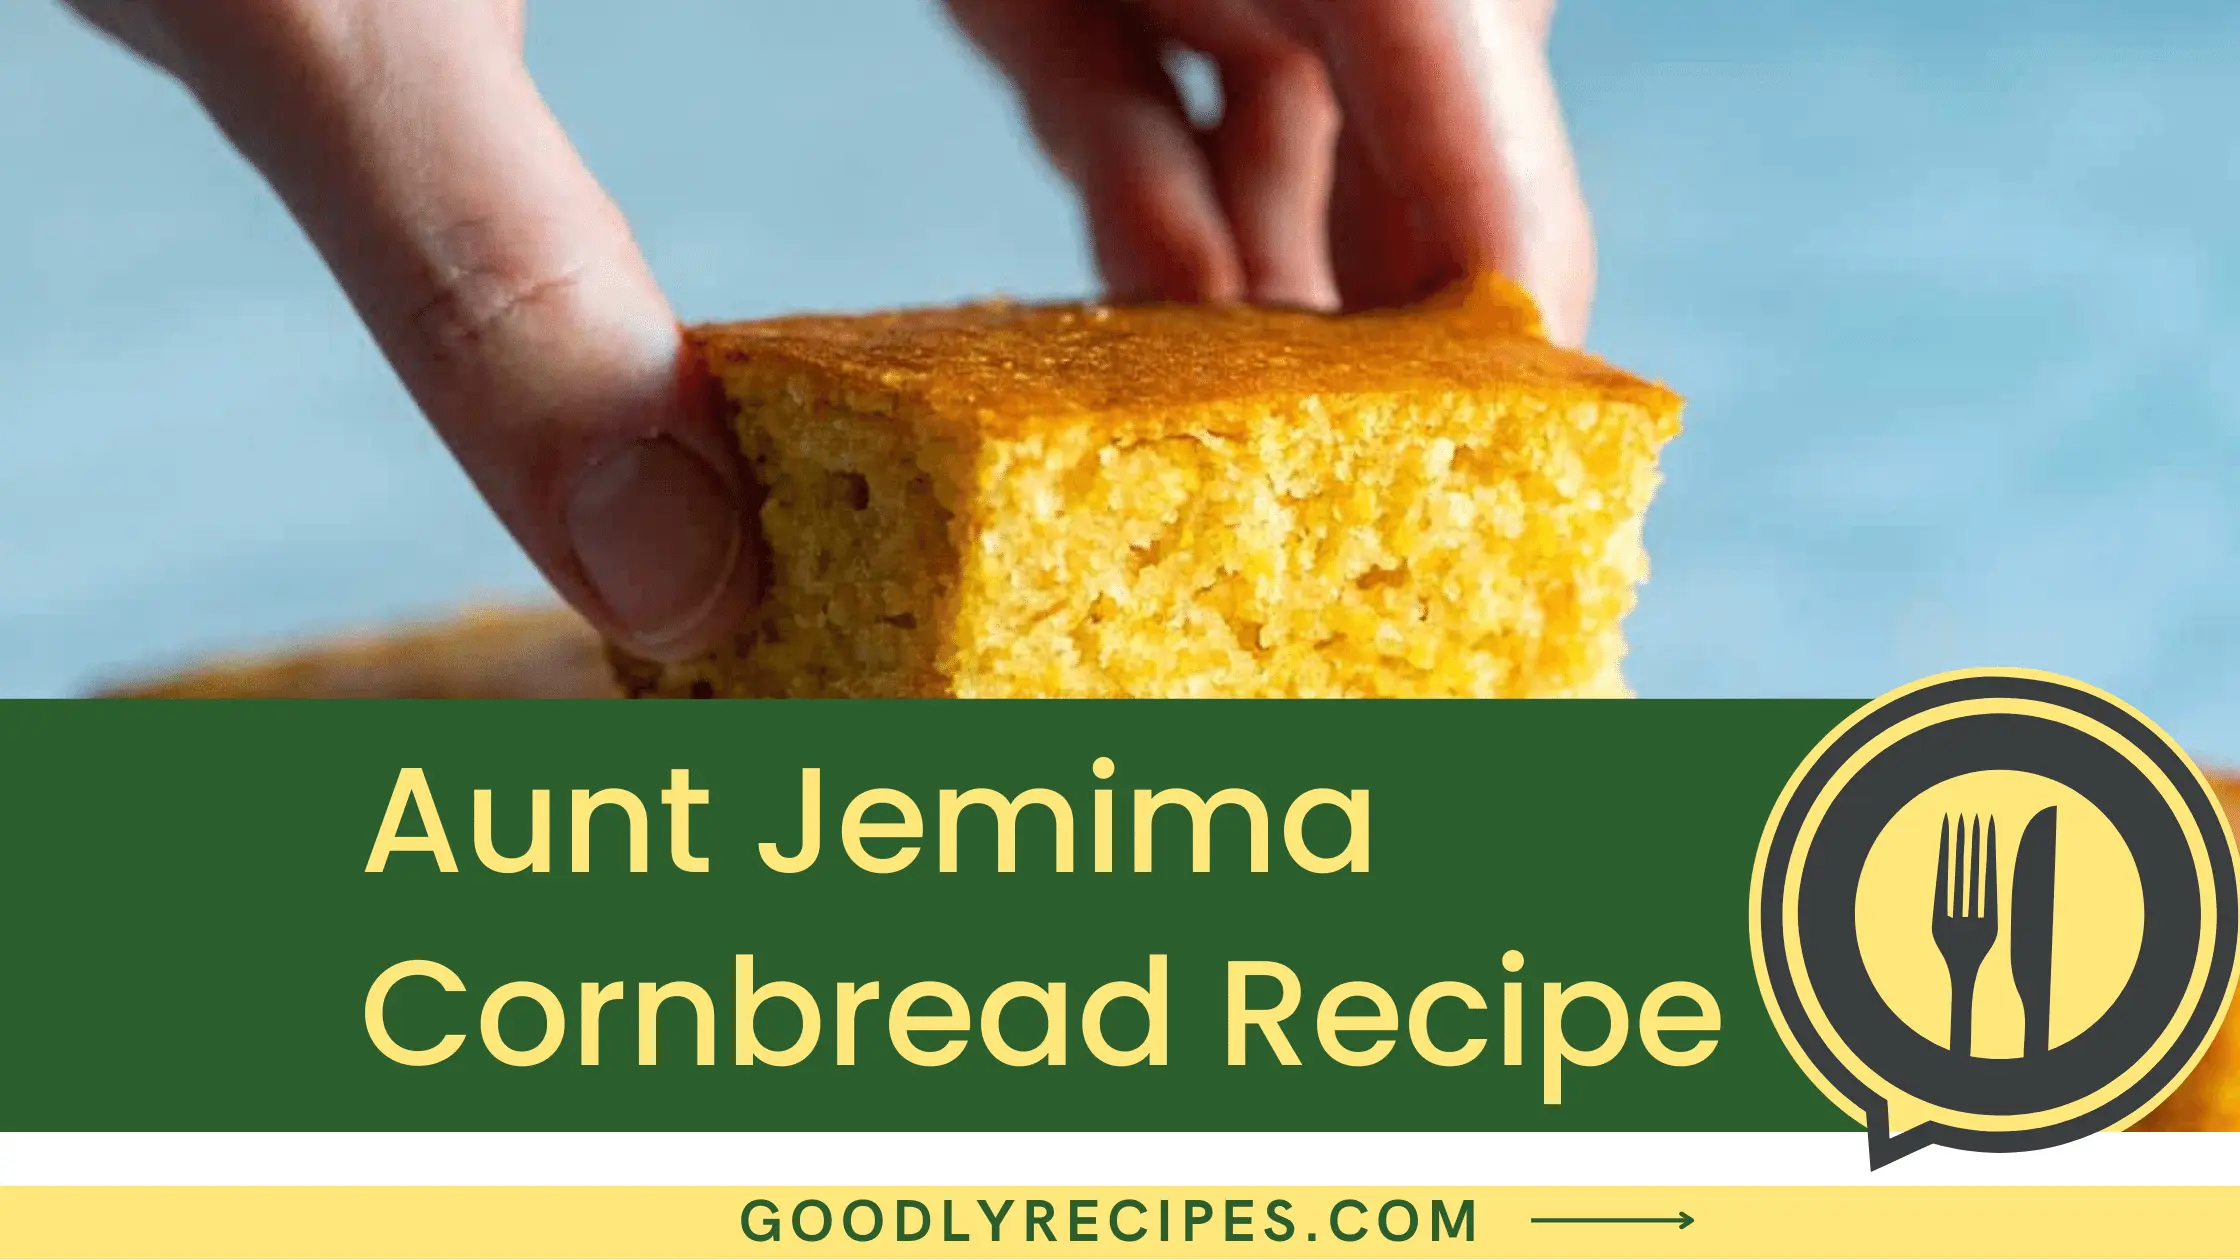 What Is Aunt Jemima Cornbread?